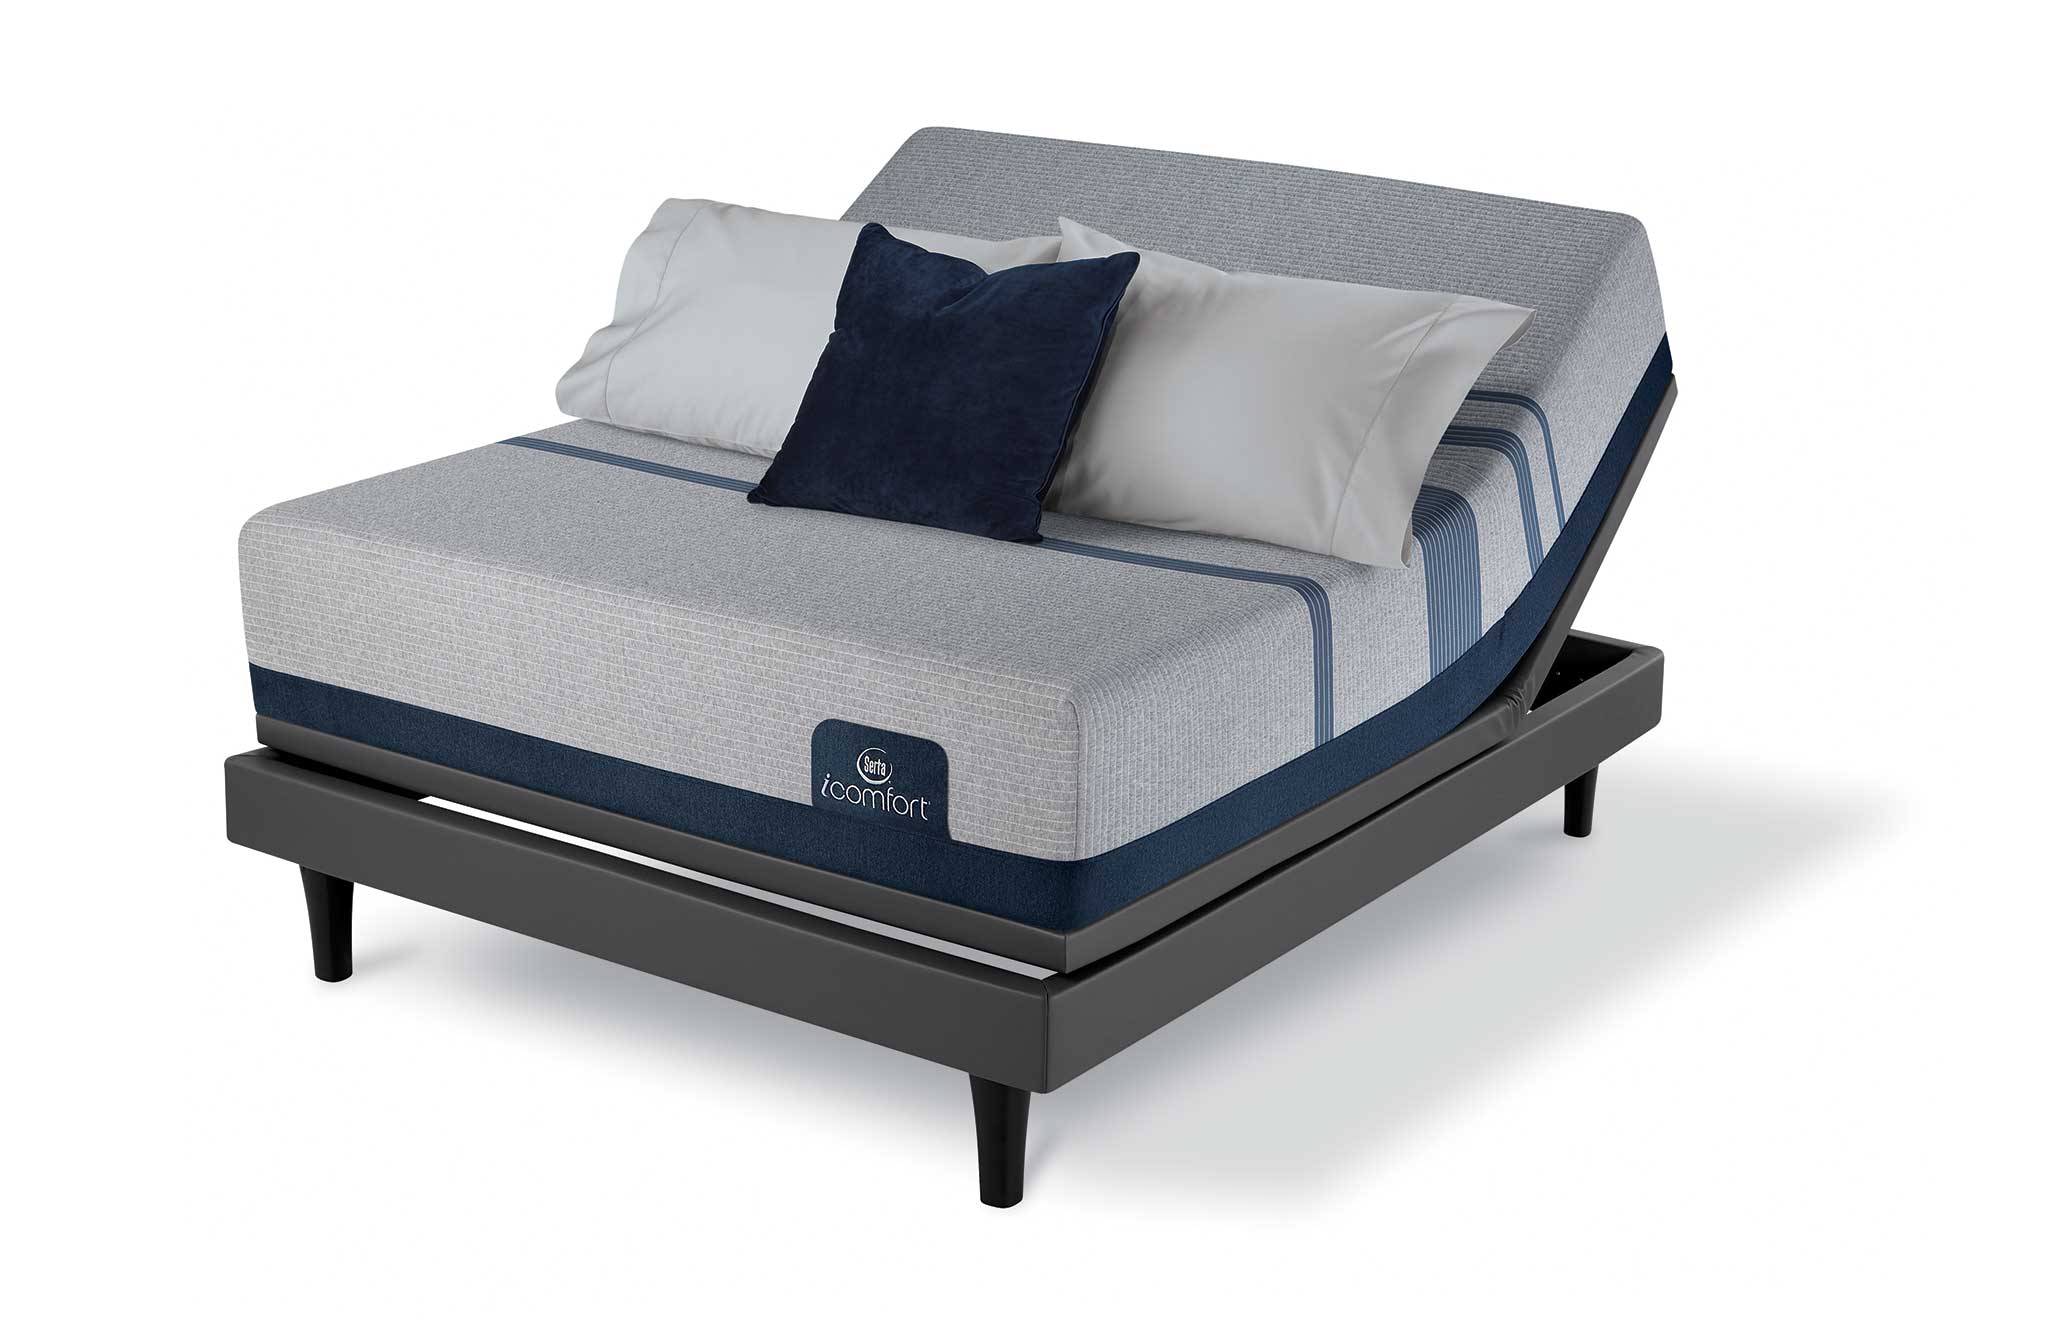 blue max 1000 plush queen mattress reviews